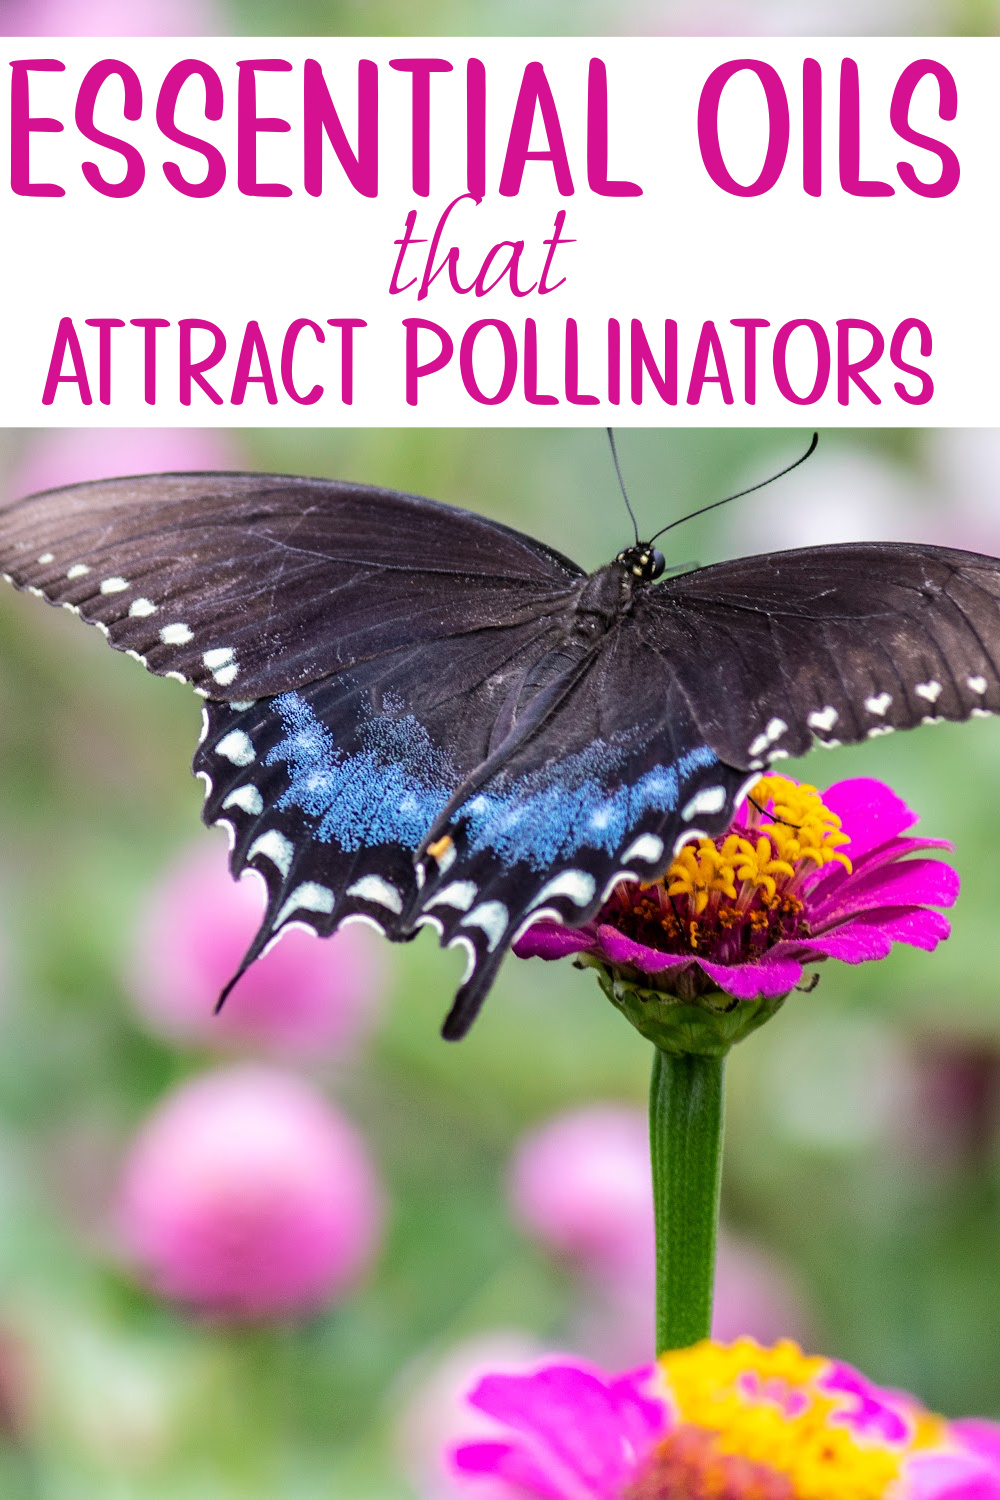 Essential Oils that Attract Pollinators!